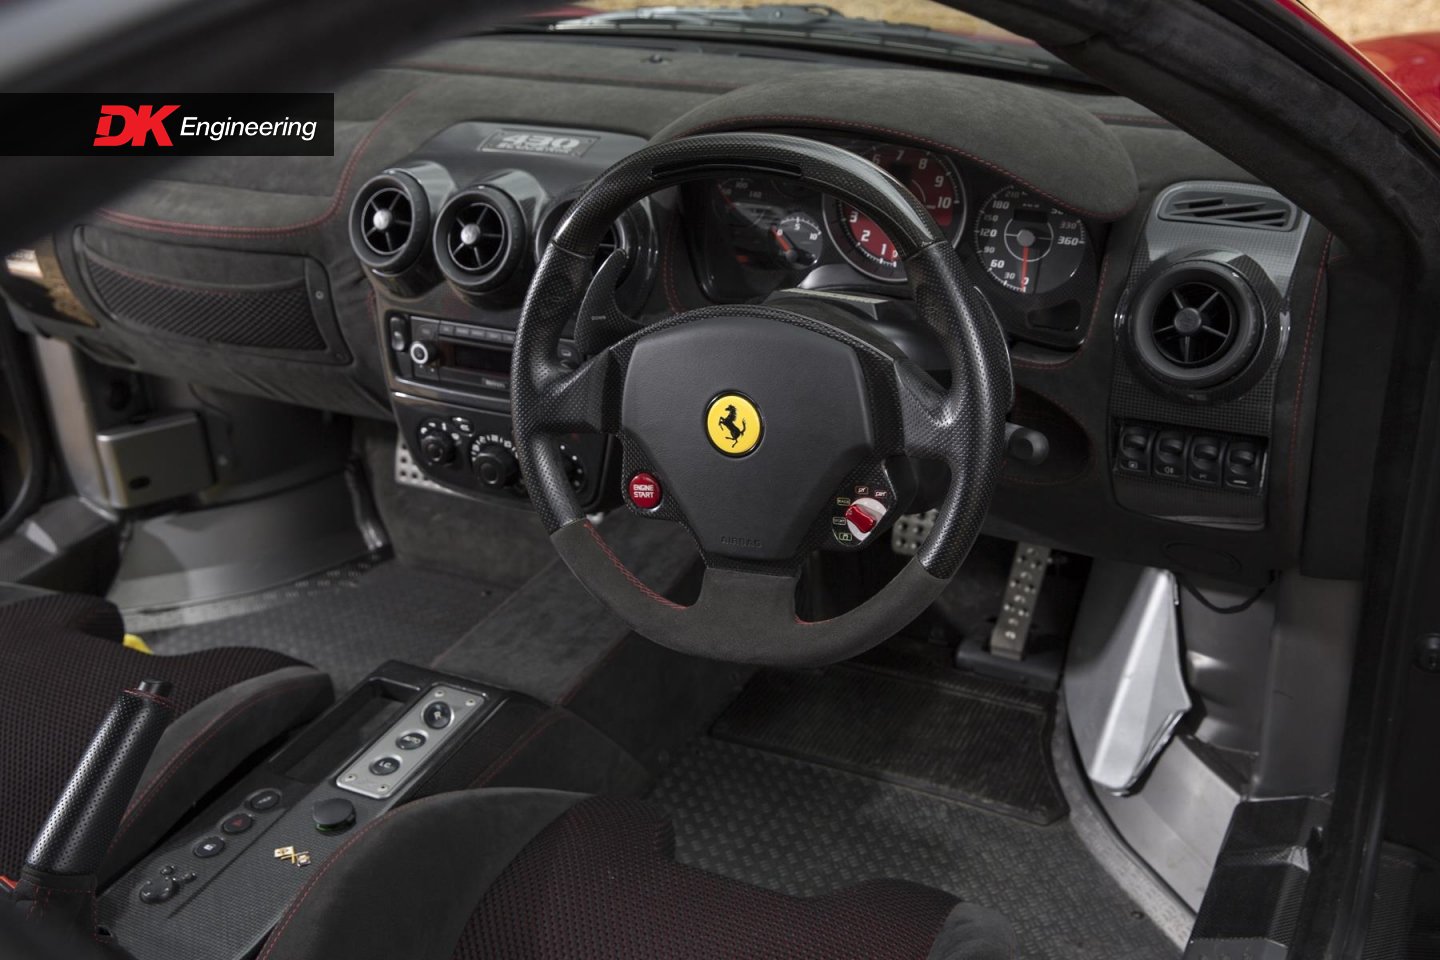 Rosso Mugello Ferrari 430 Scuderia продается за 204,995 фунтов в Британии